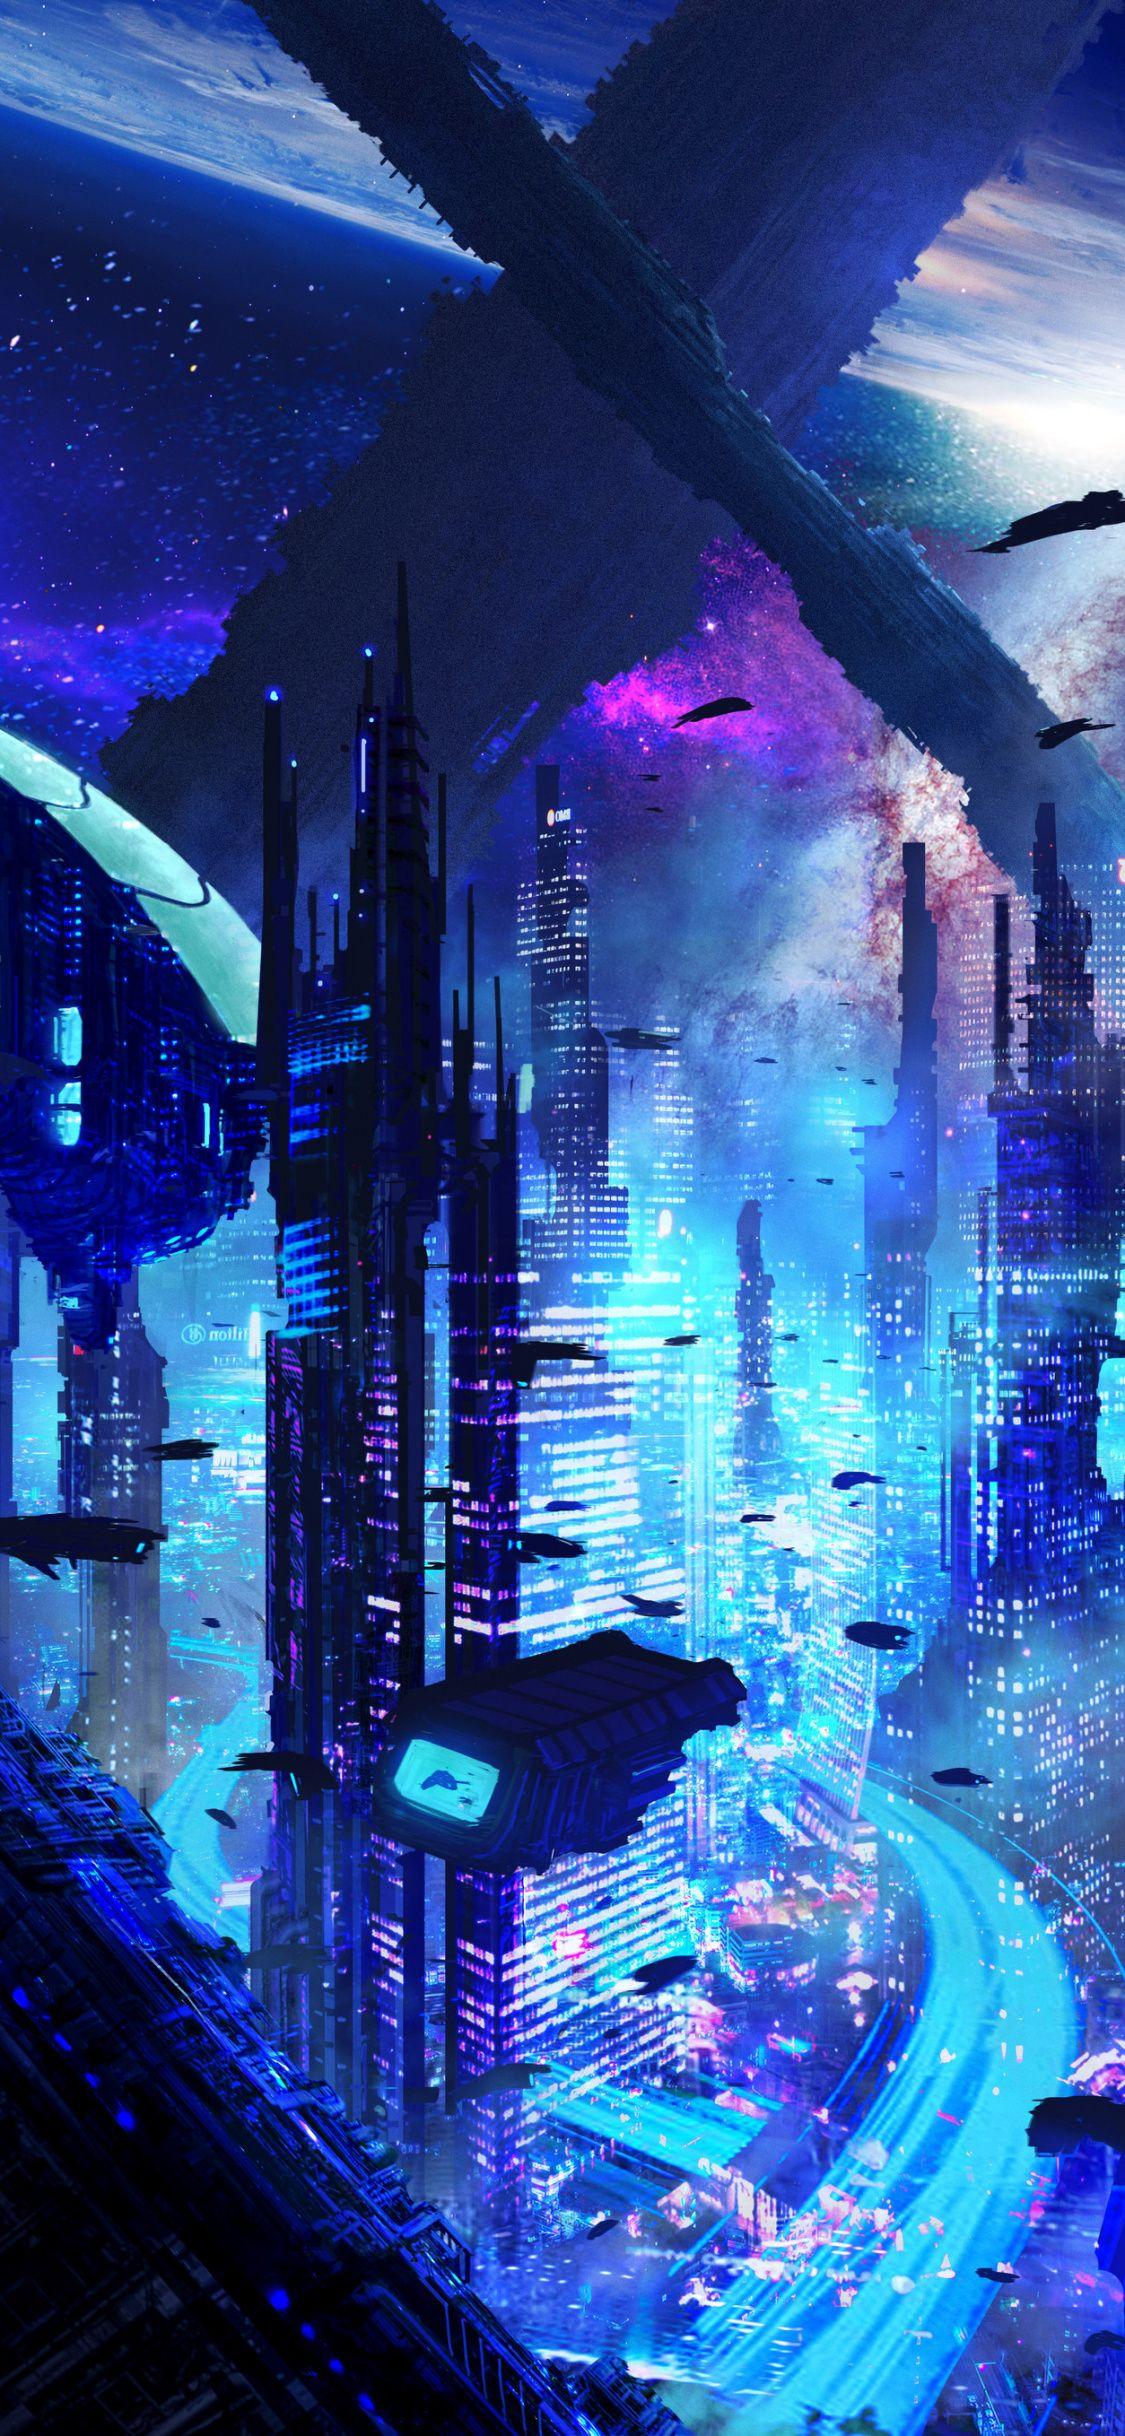 Cyberpunk Sci Fi Phone Wallpaper - Chrisyel